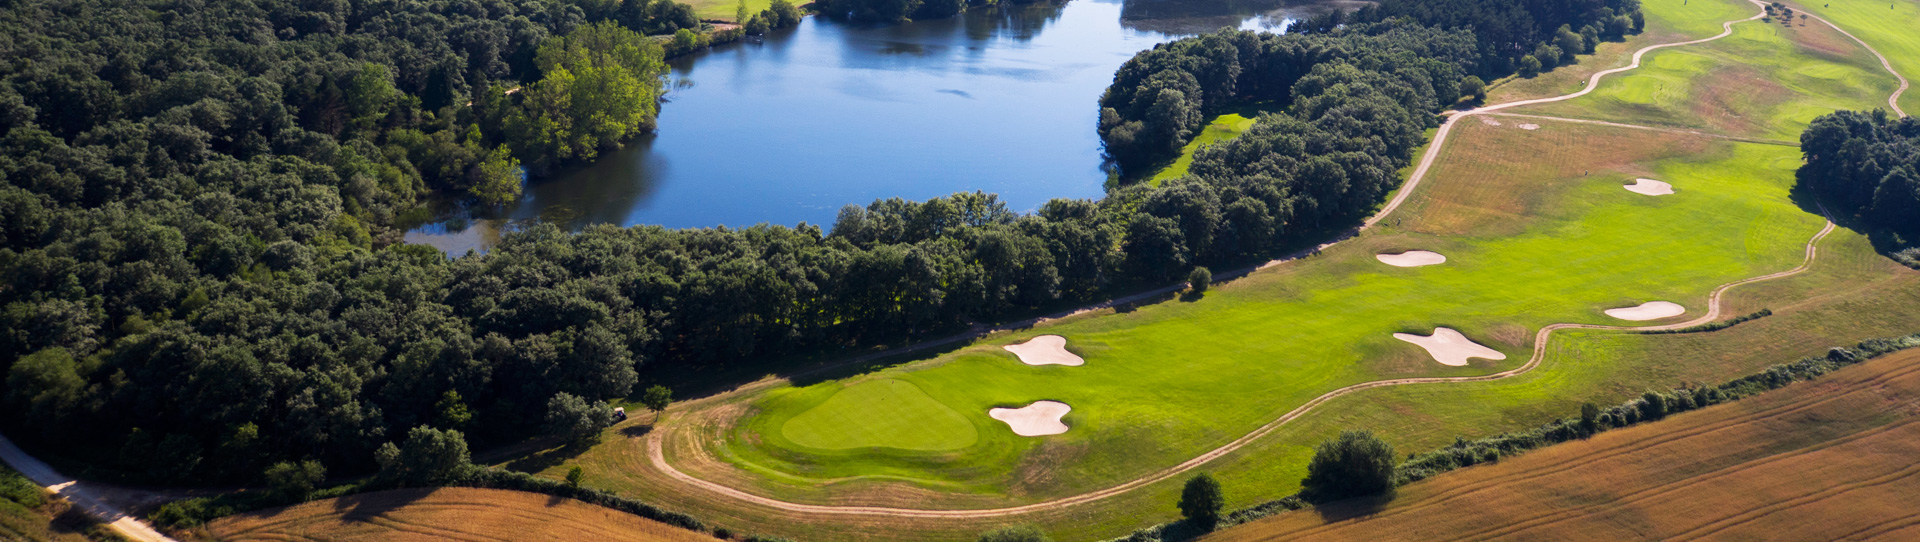 Spain golf courses - Izki Urturi Golf Course - Photo 3